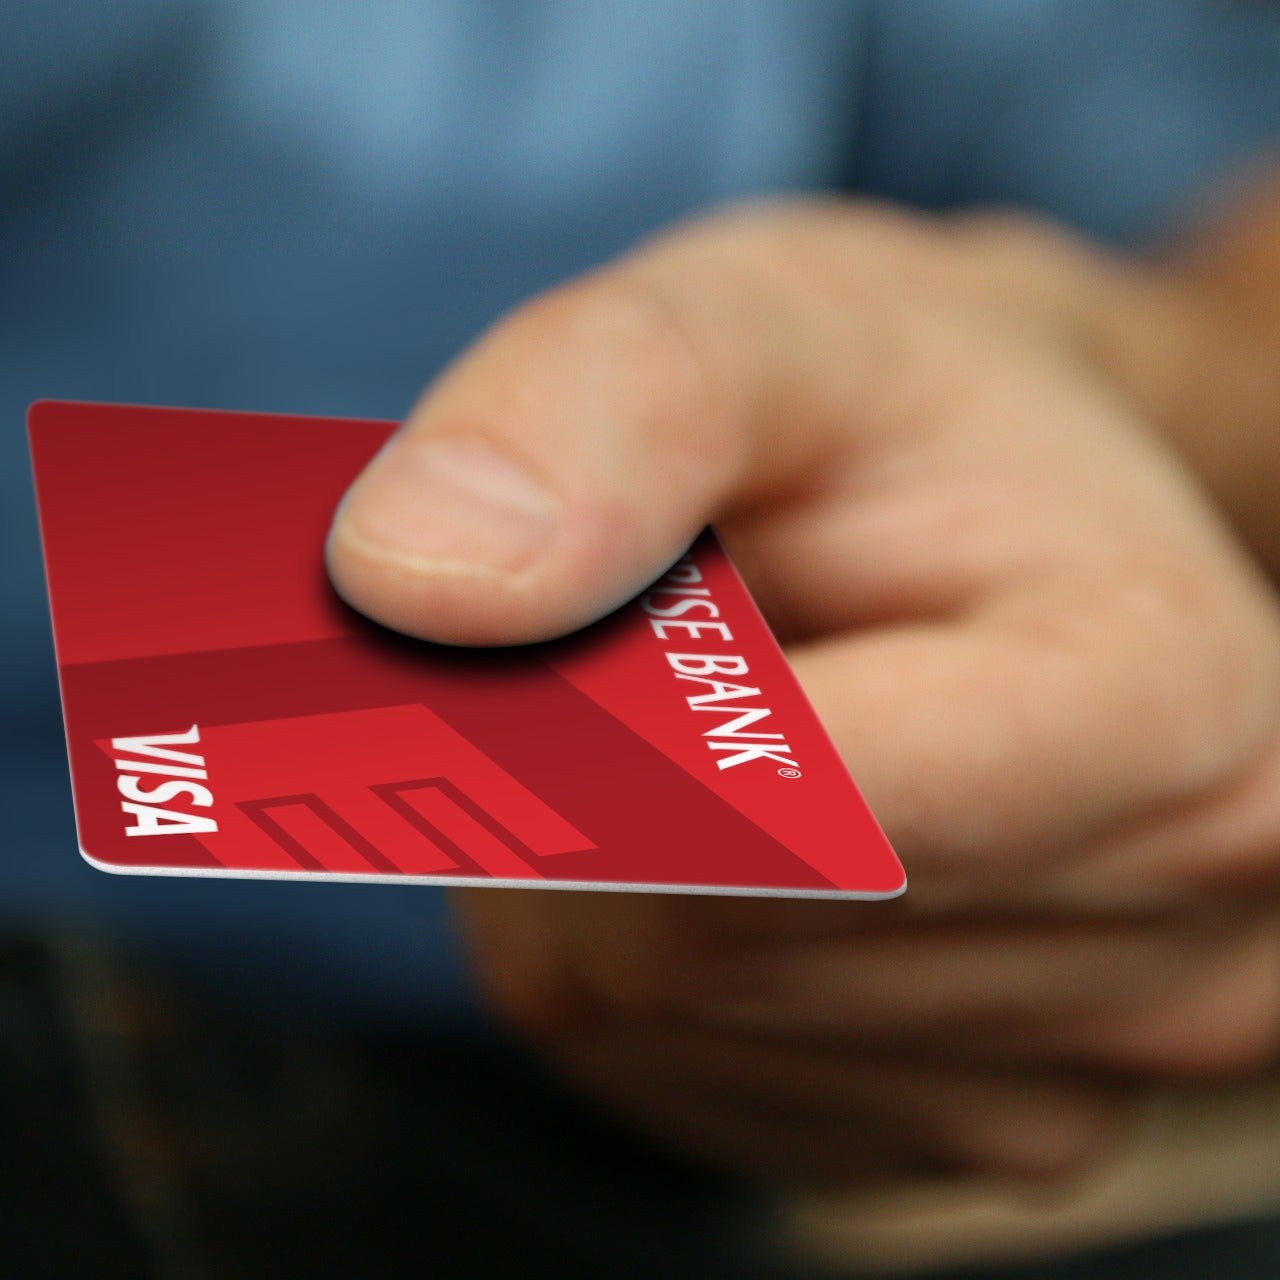 Customer holds business debit card